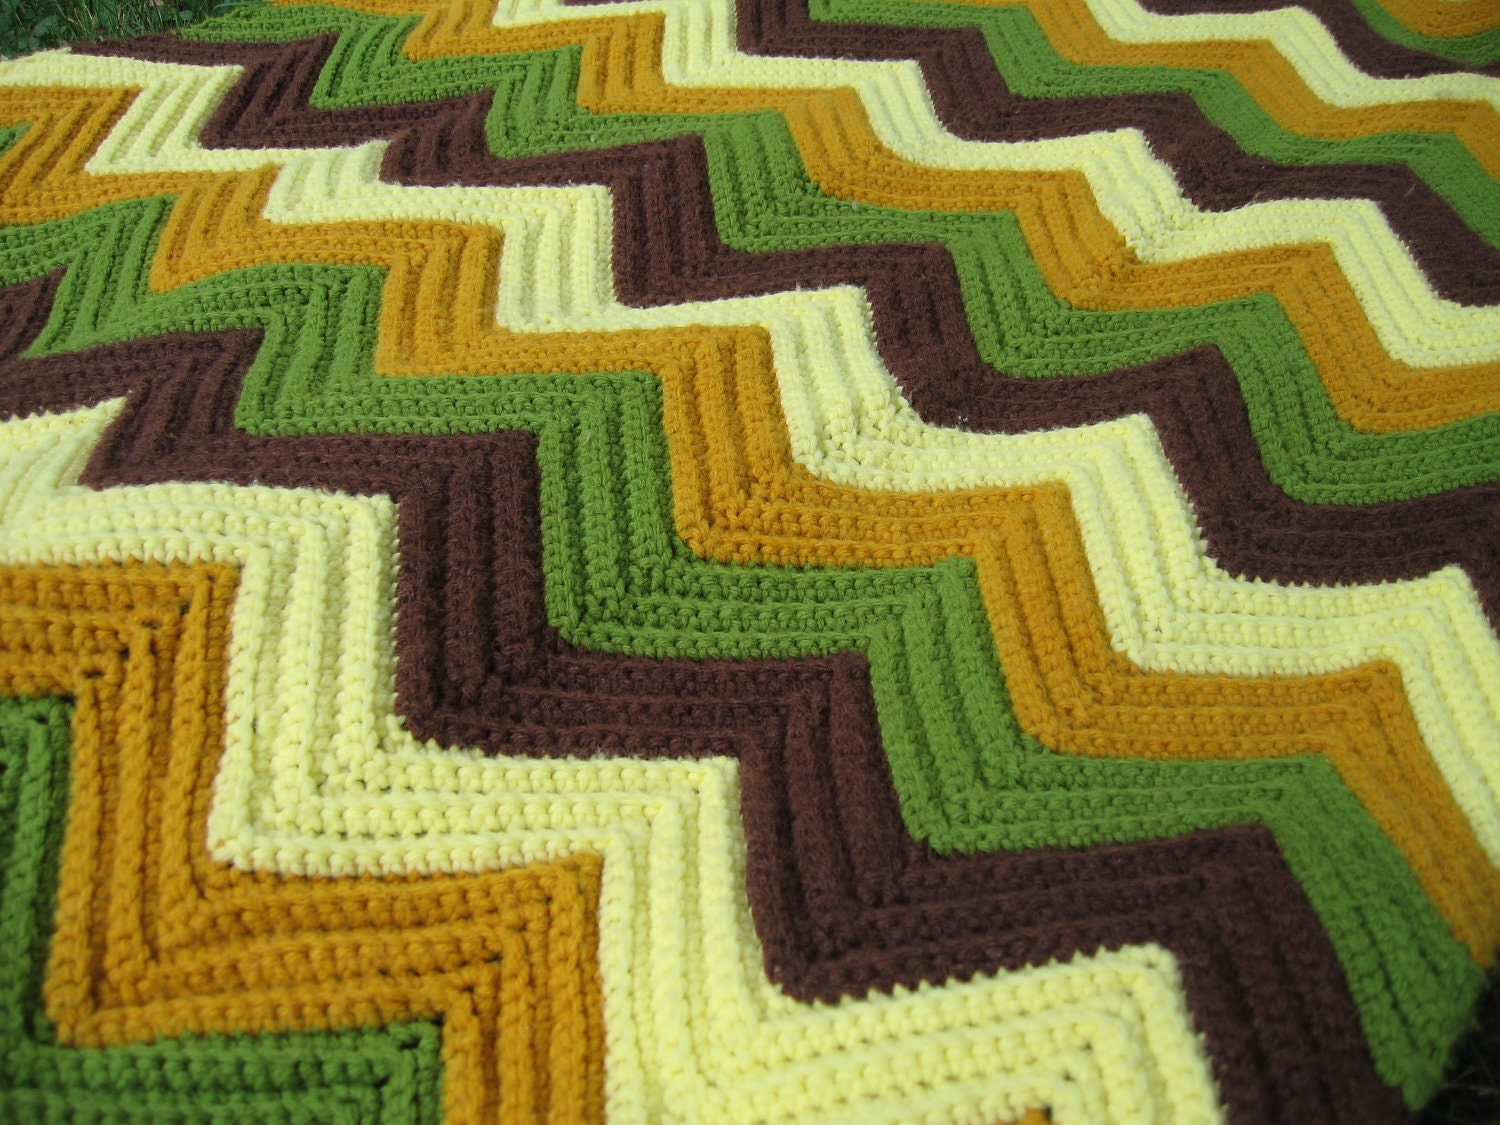 Vintage Crochet Afghan Blanket Zig-Zag Pattern by SunandPearl